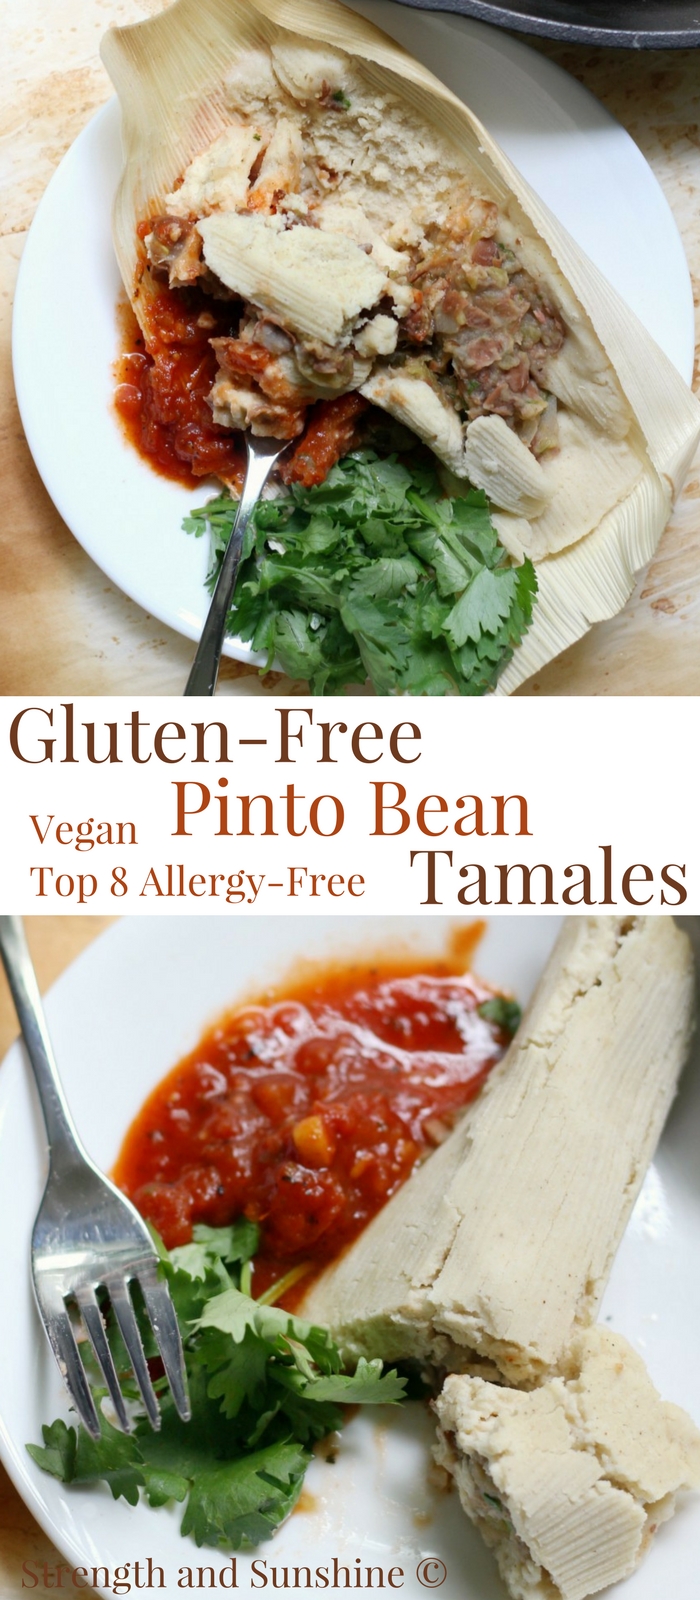 https://strengthandsunshine.com/wp-content/uploads/2018/04/Gluten-Free-Pinto-Bean-Tamales-Vegan-Allergy-Free-PM2.jpg